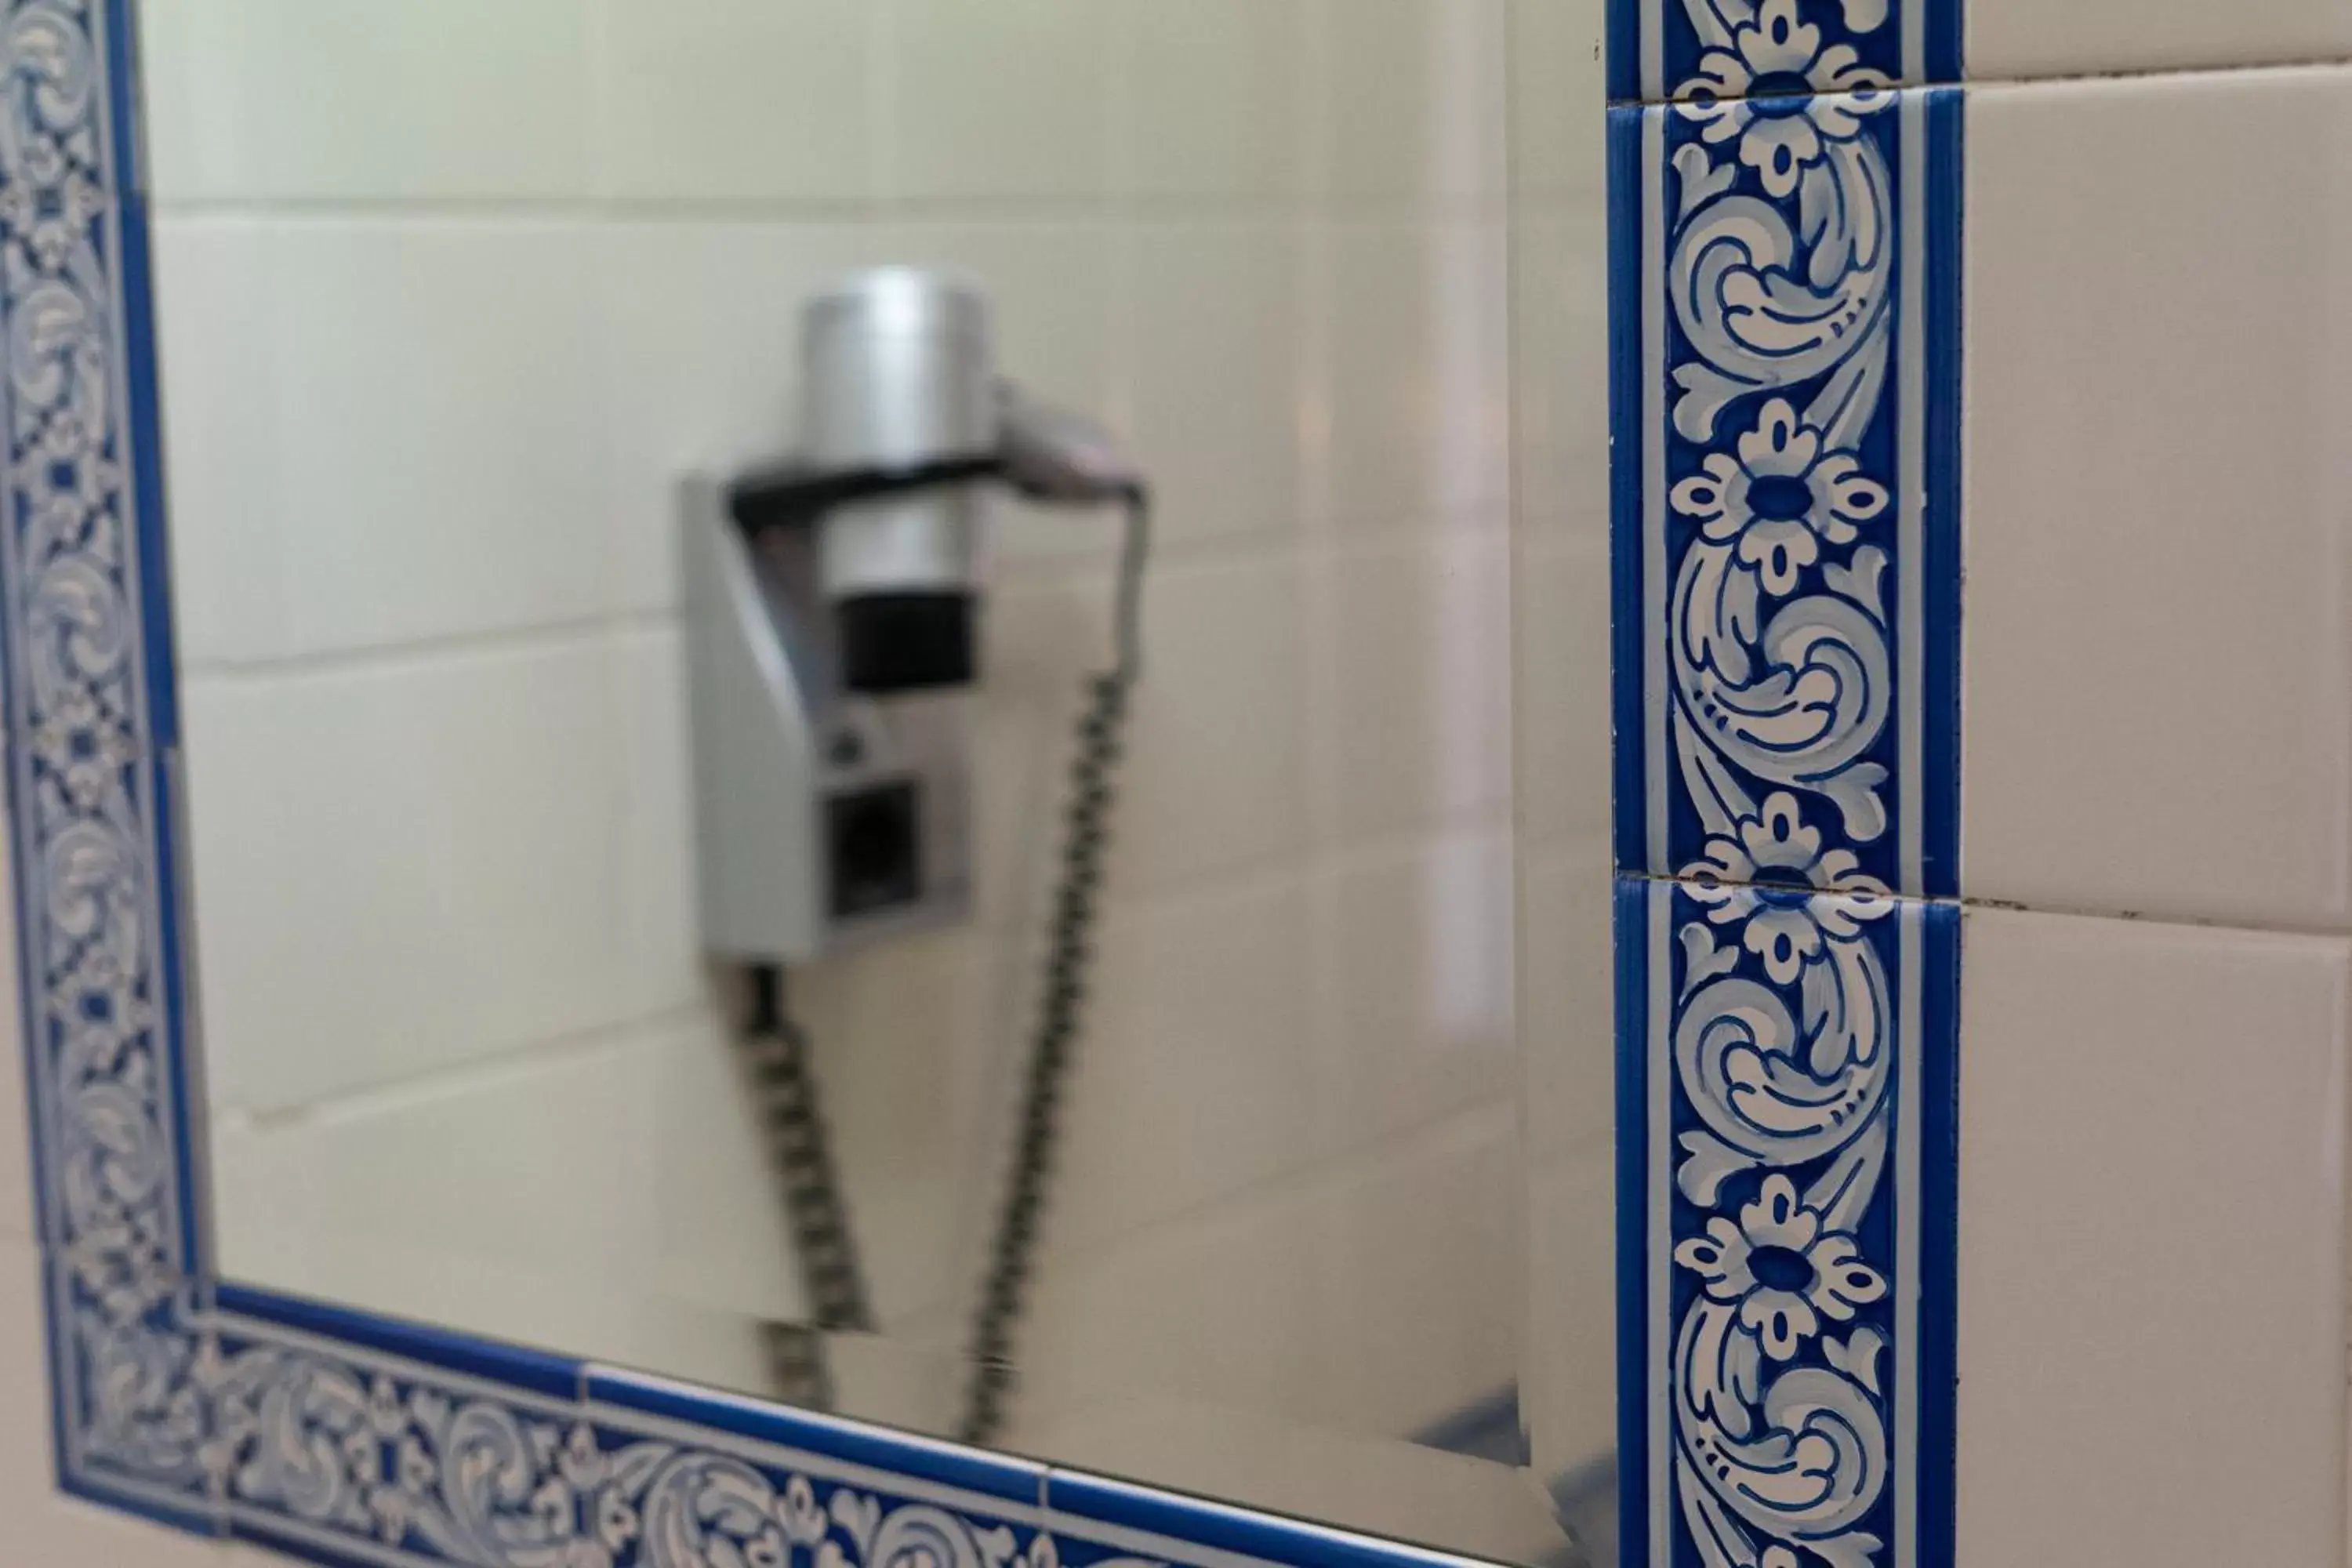 Bathroom in Hotel Vitória